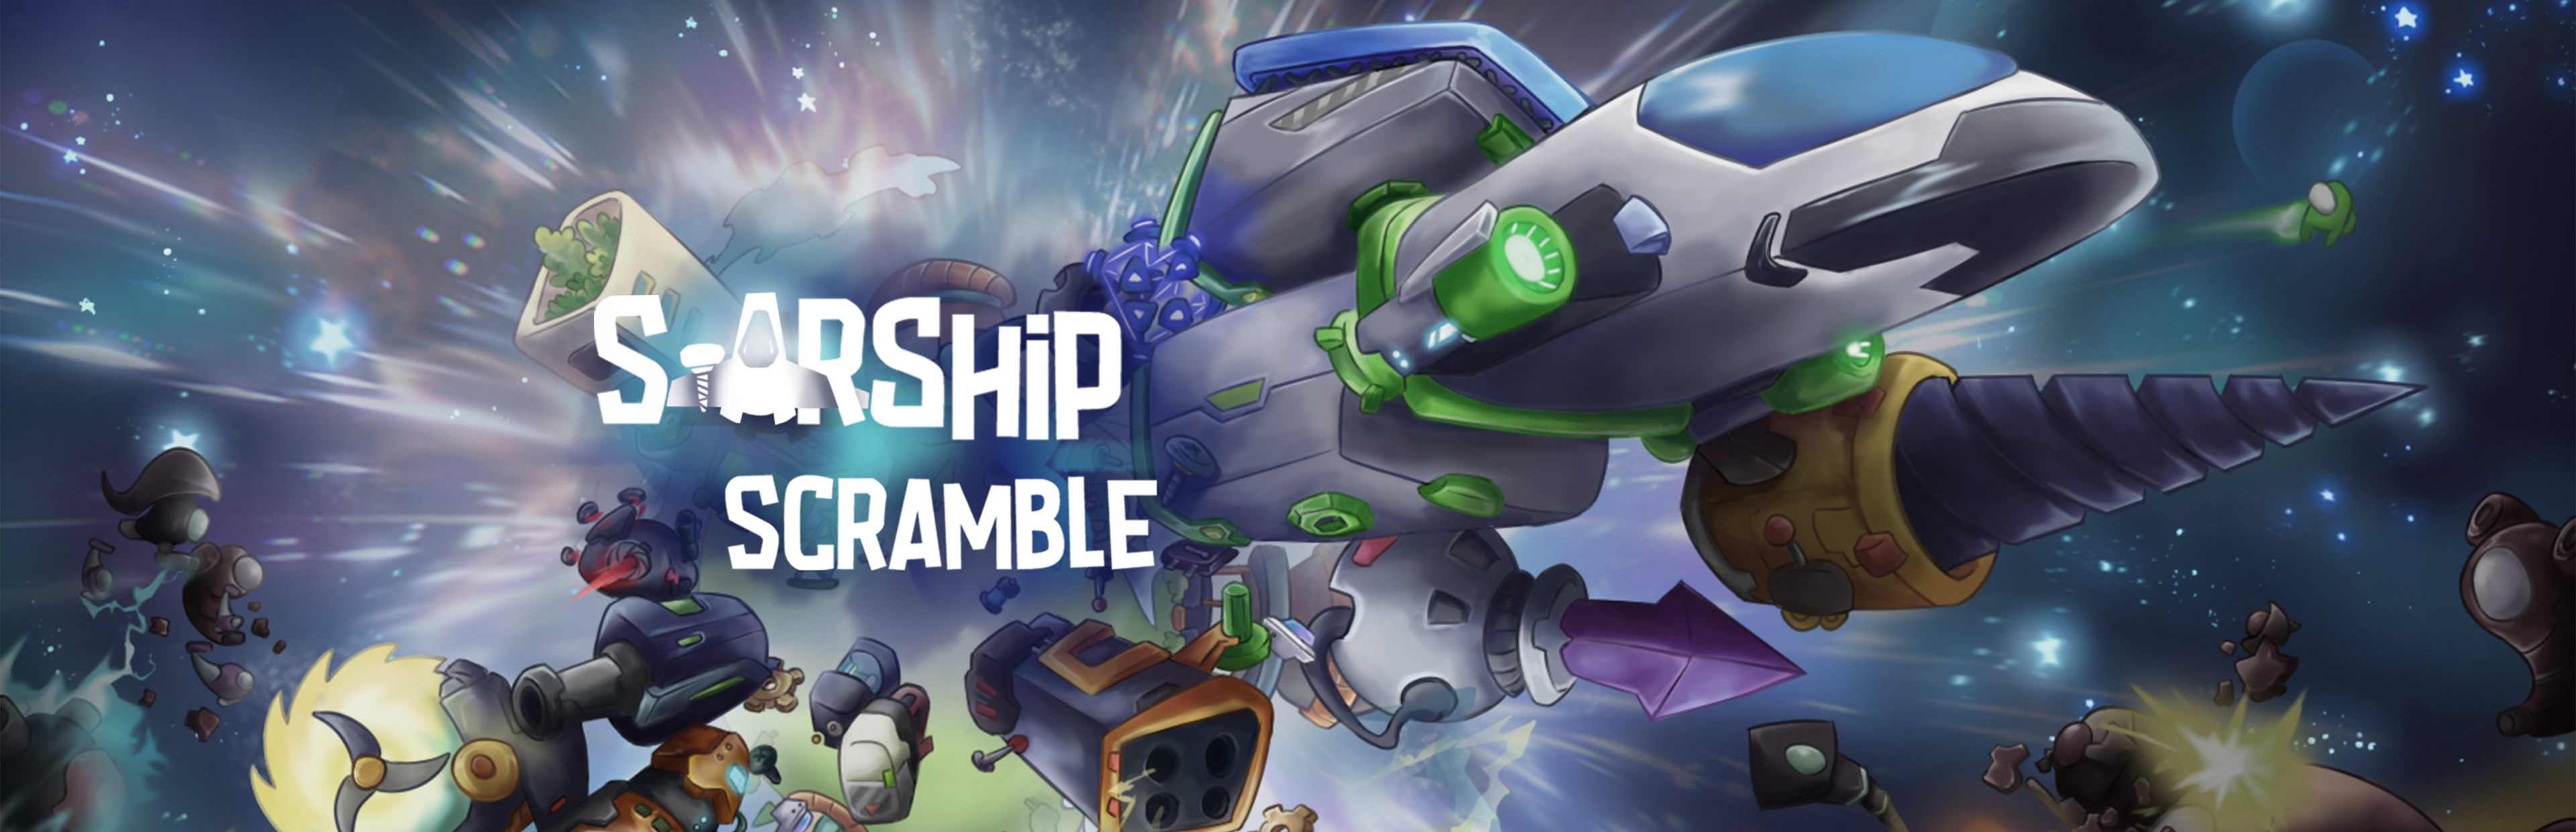 Starship Scramble Demo Build